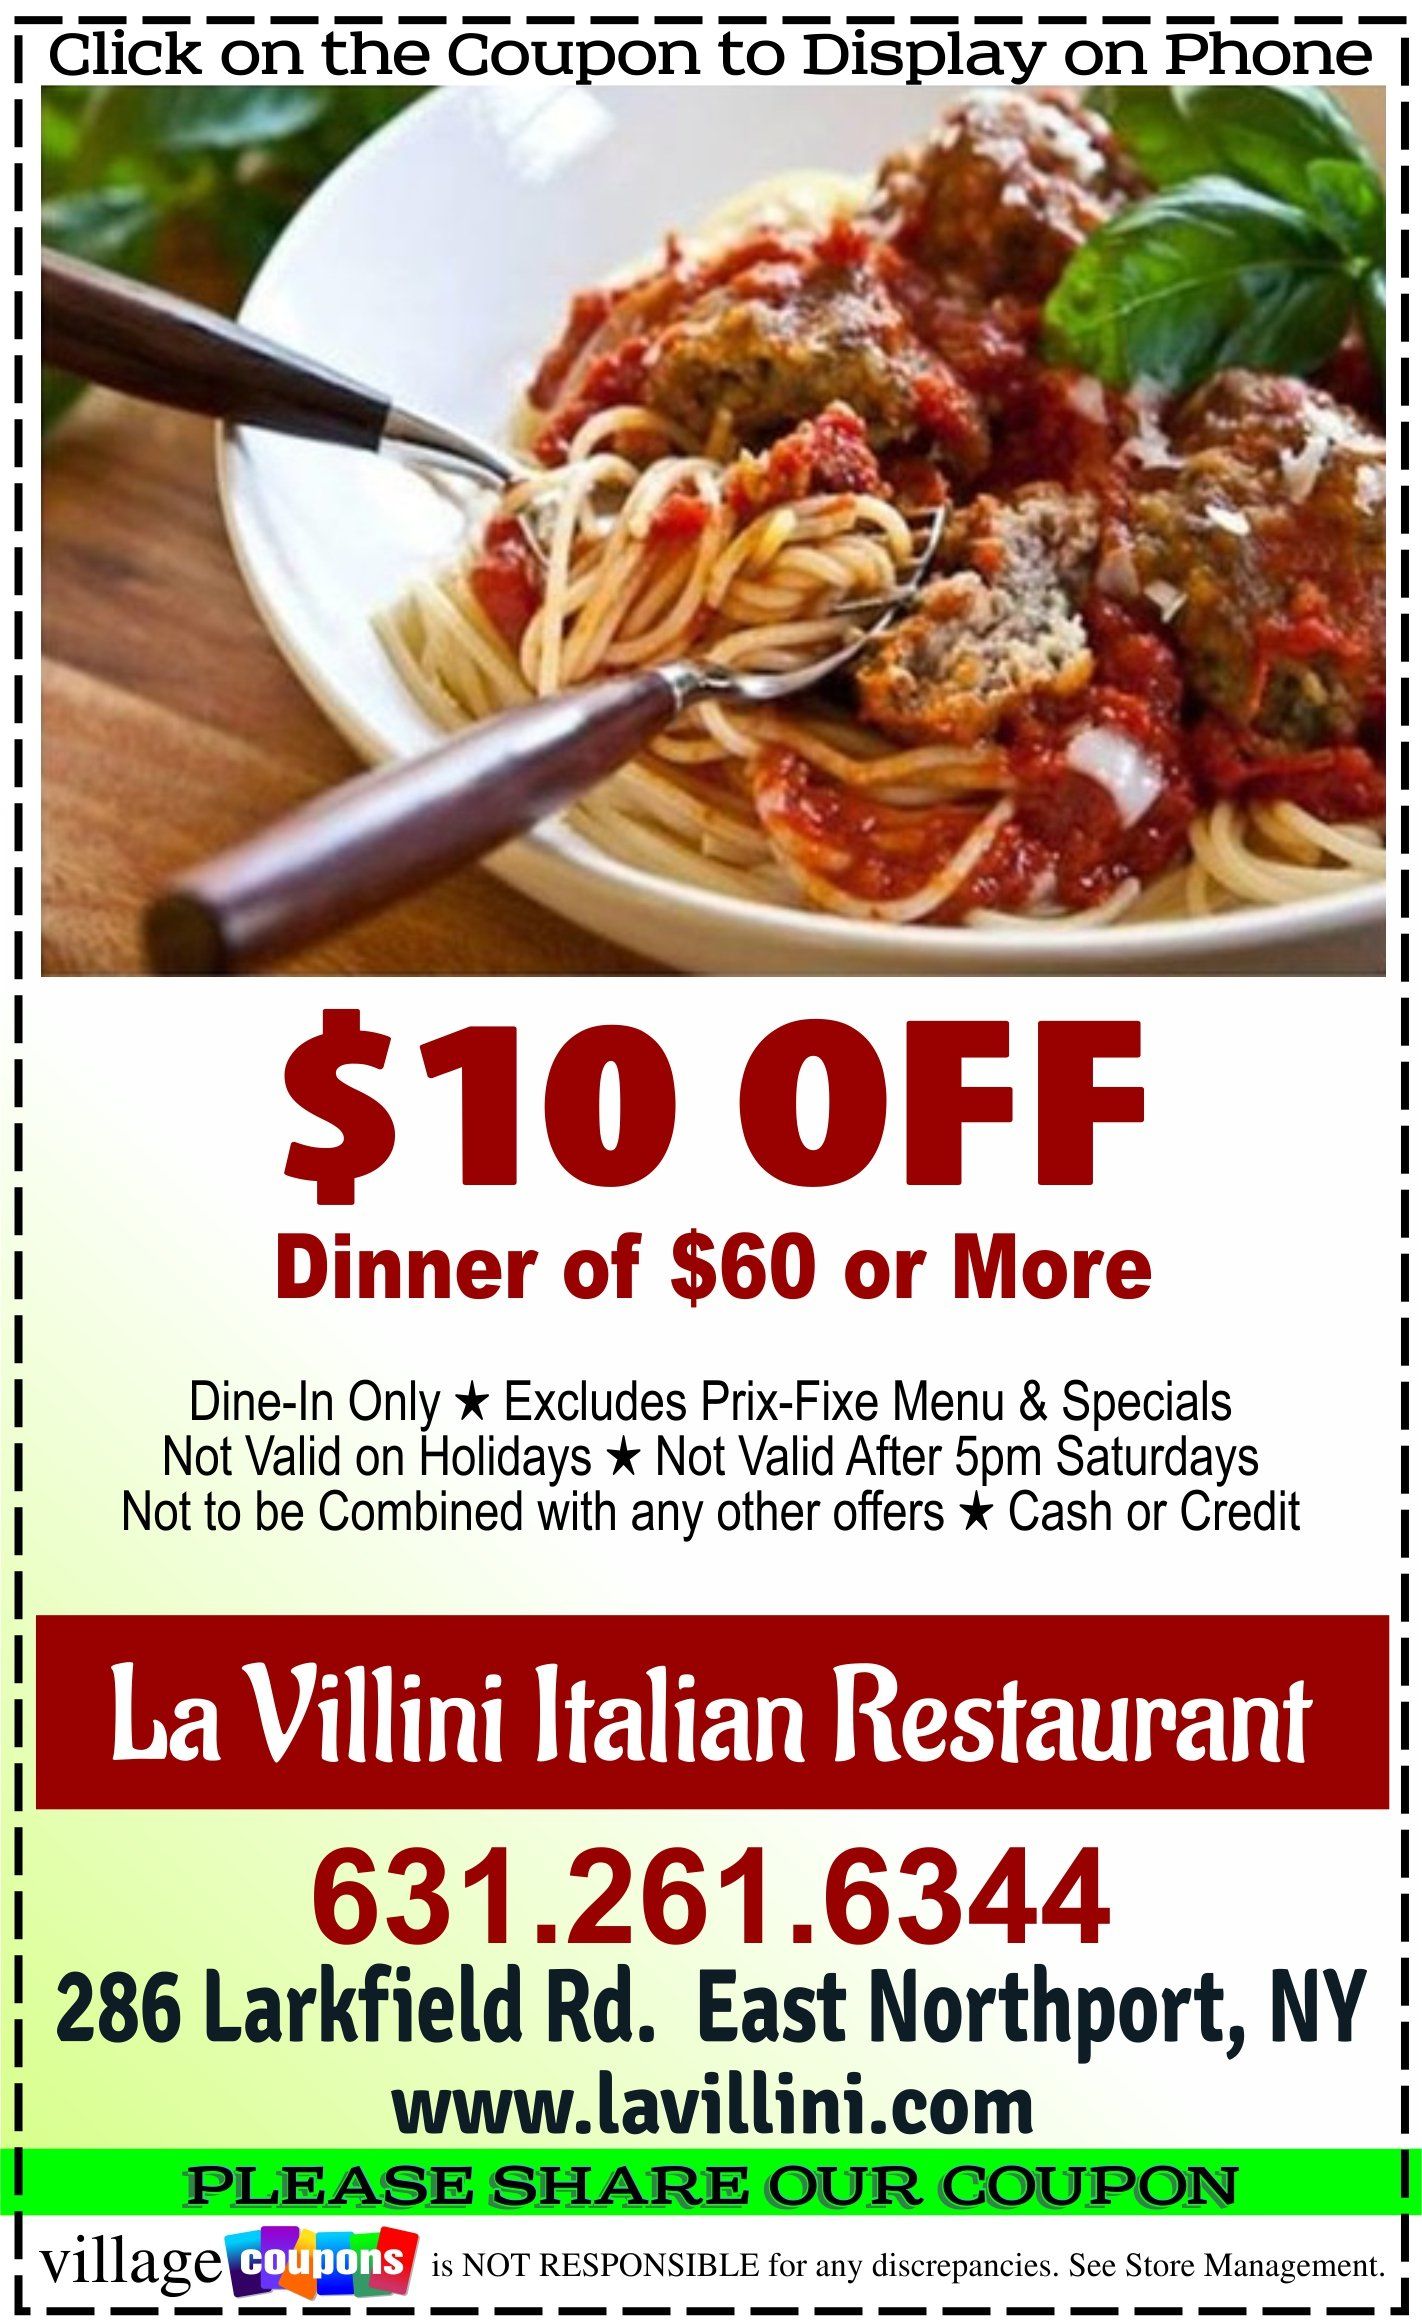 A coupon for la villini italian restaurant in east northport ny